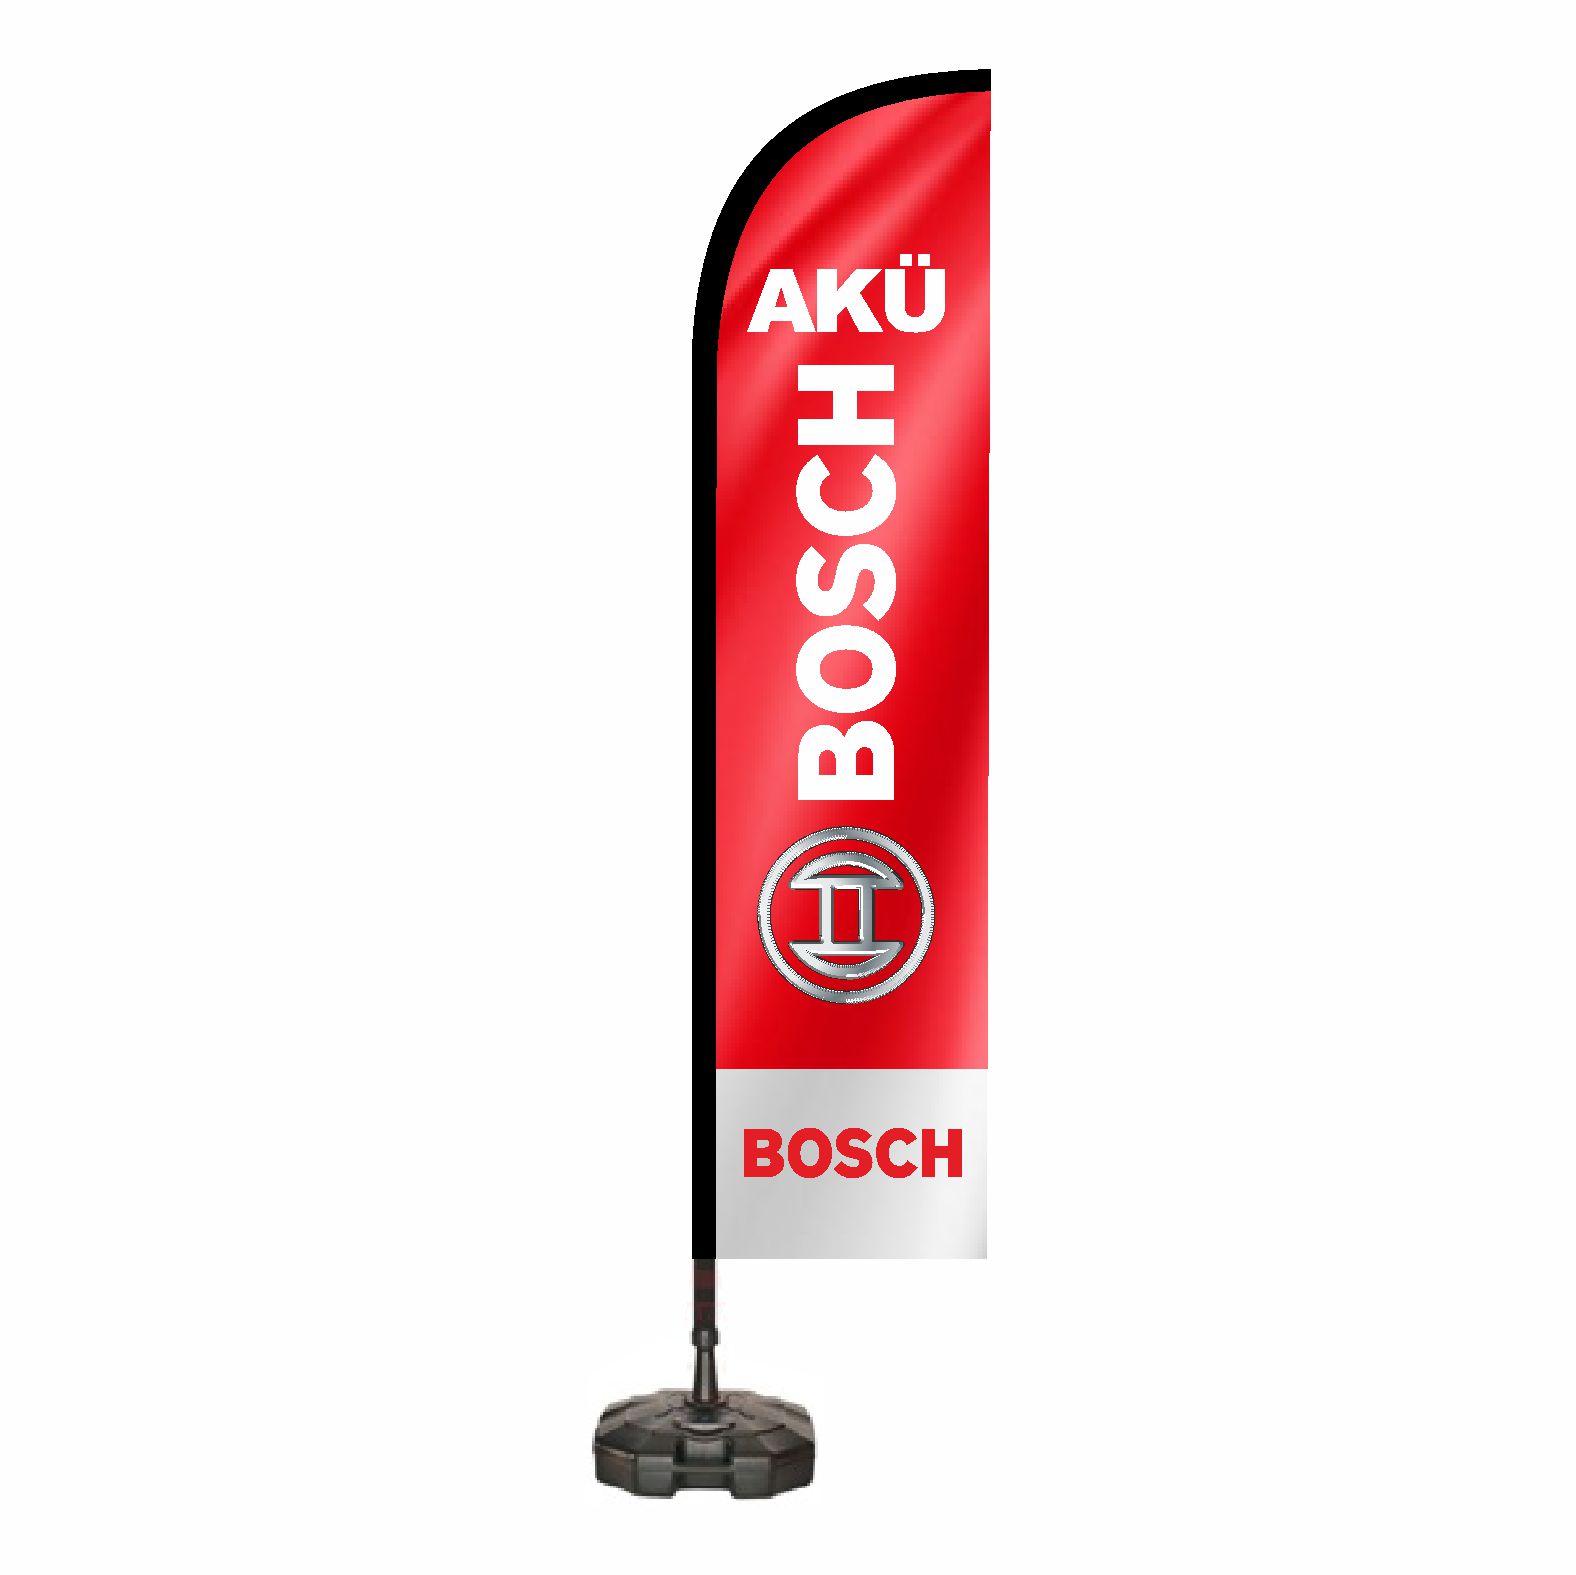 Bosch Akü Dubalı Bayraklar